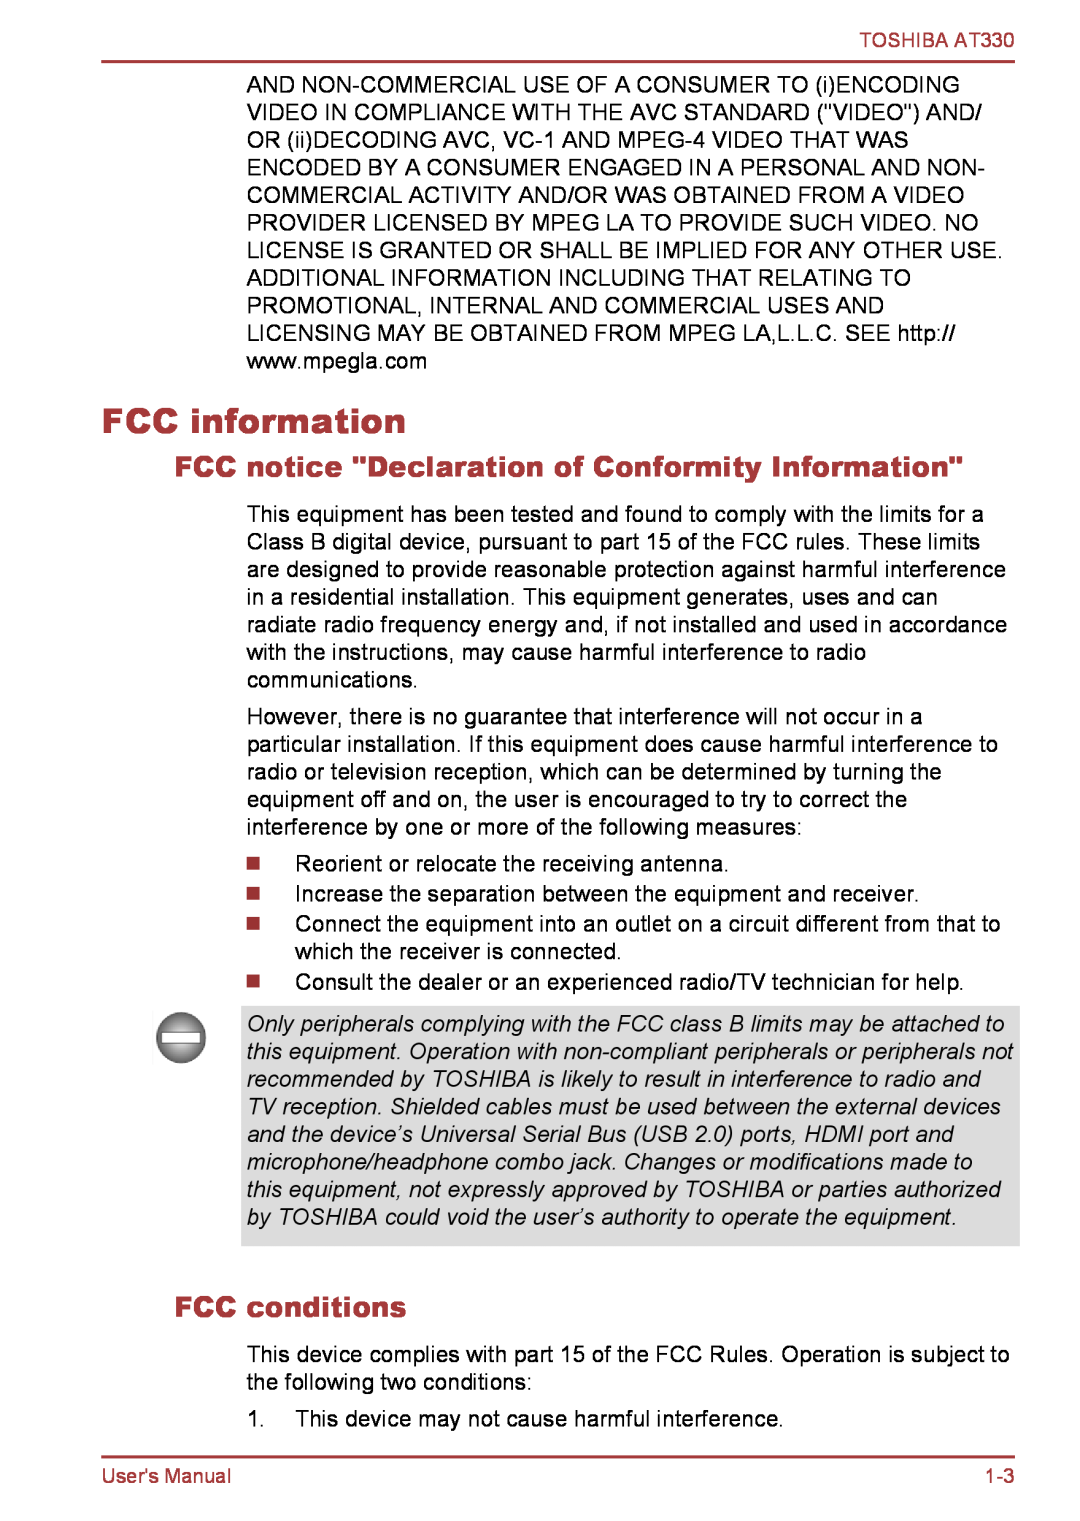 Toshiba at330 user manual FCC information, FCC notice Declaration of Conformity Information, FCC conditions 